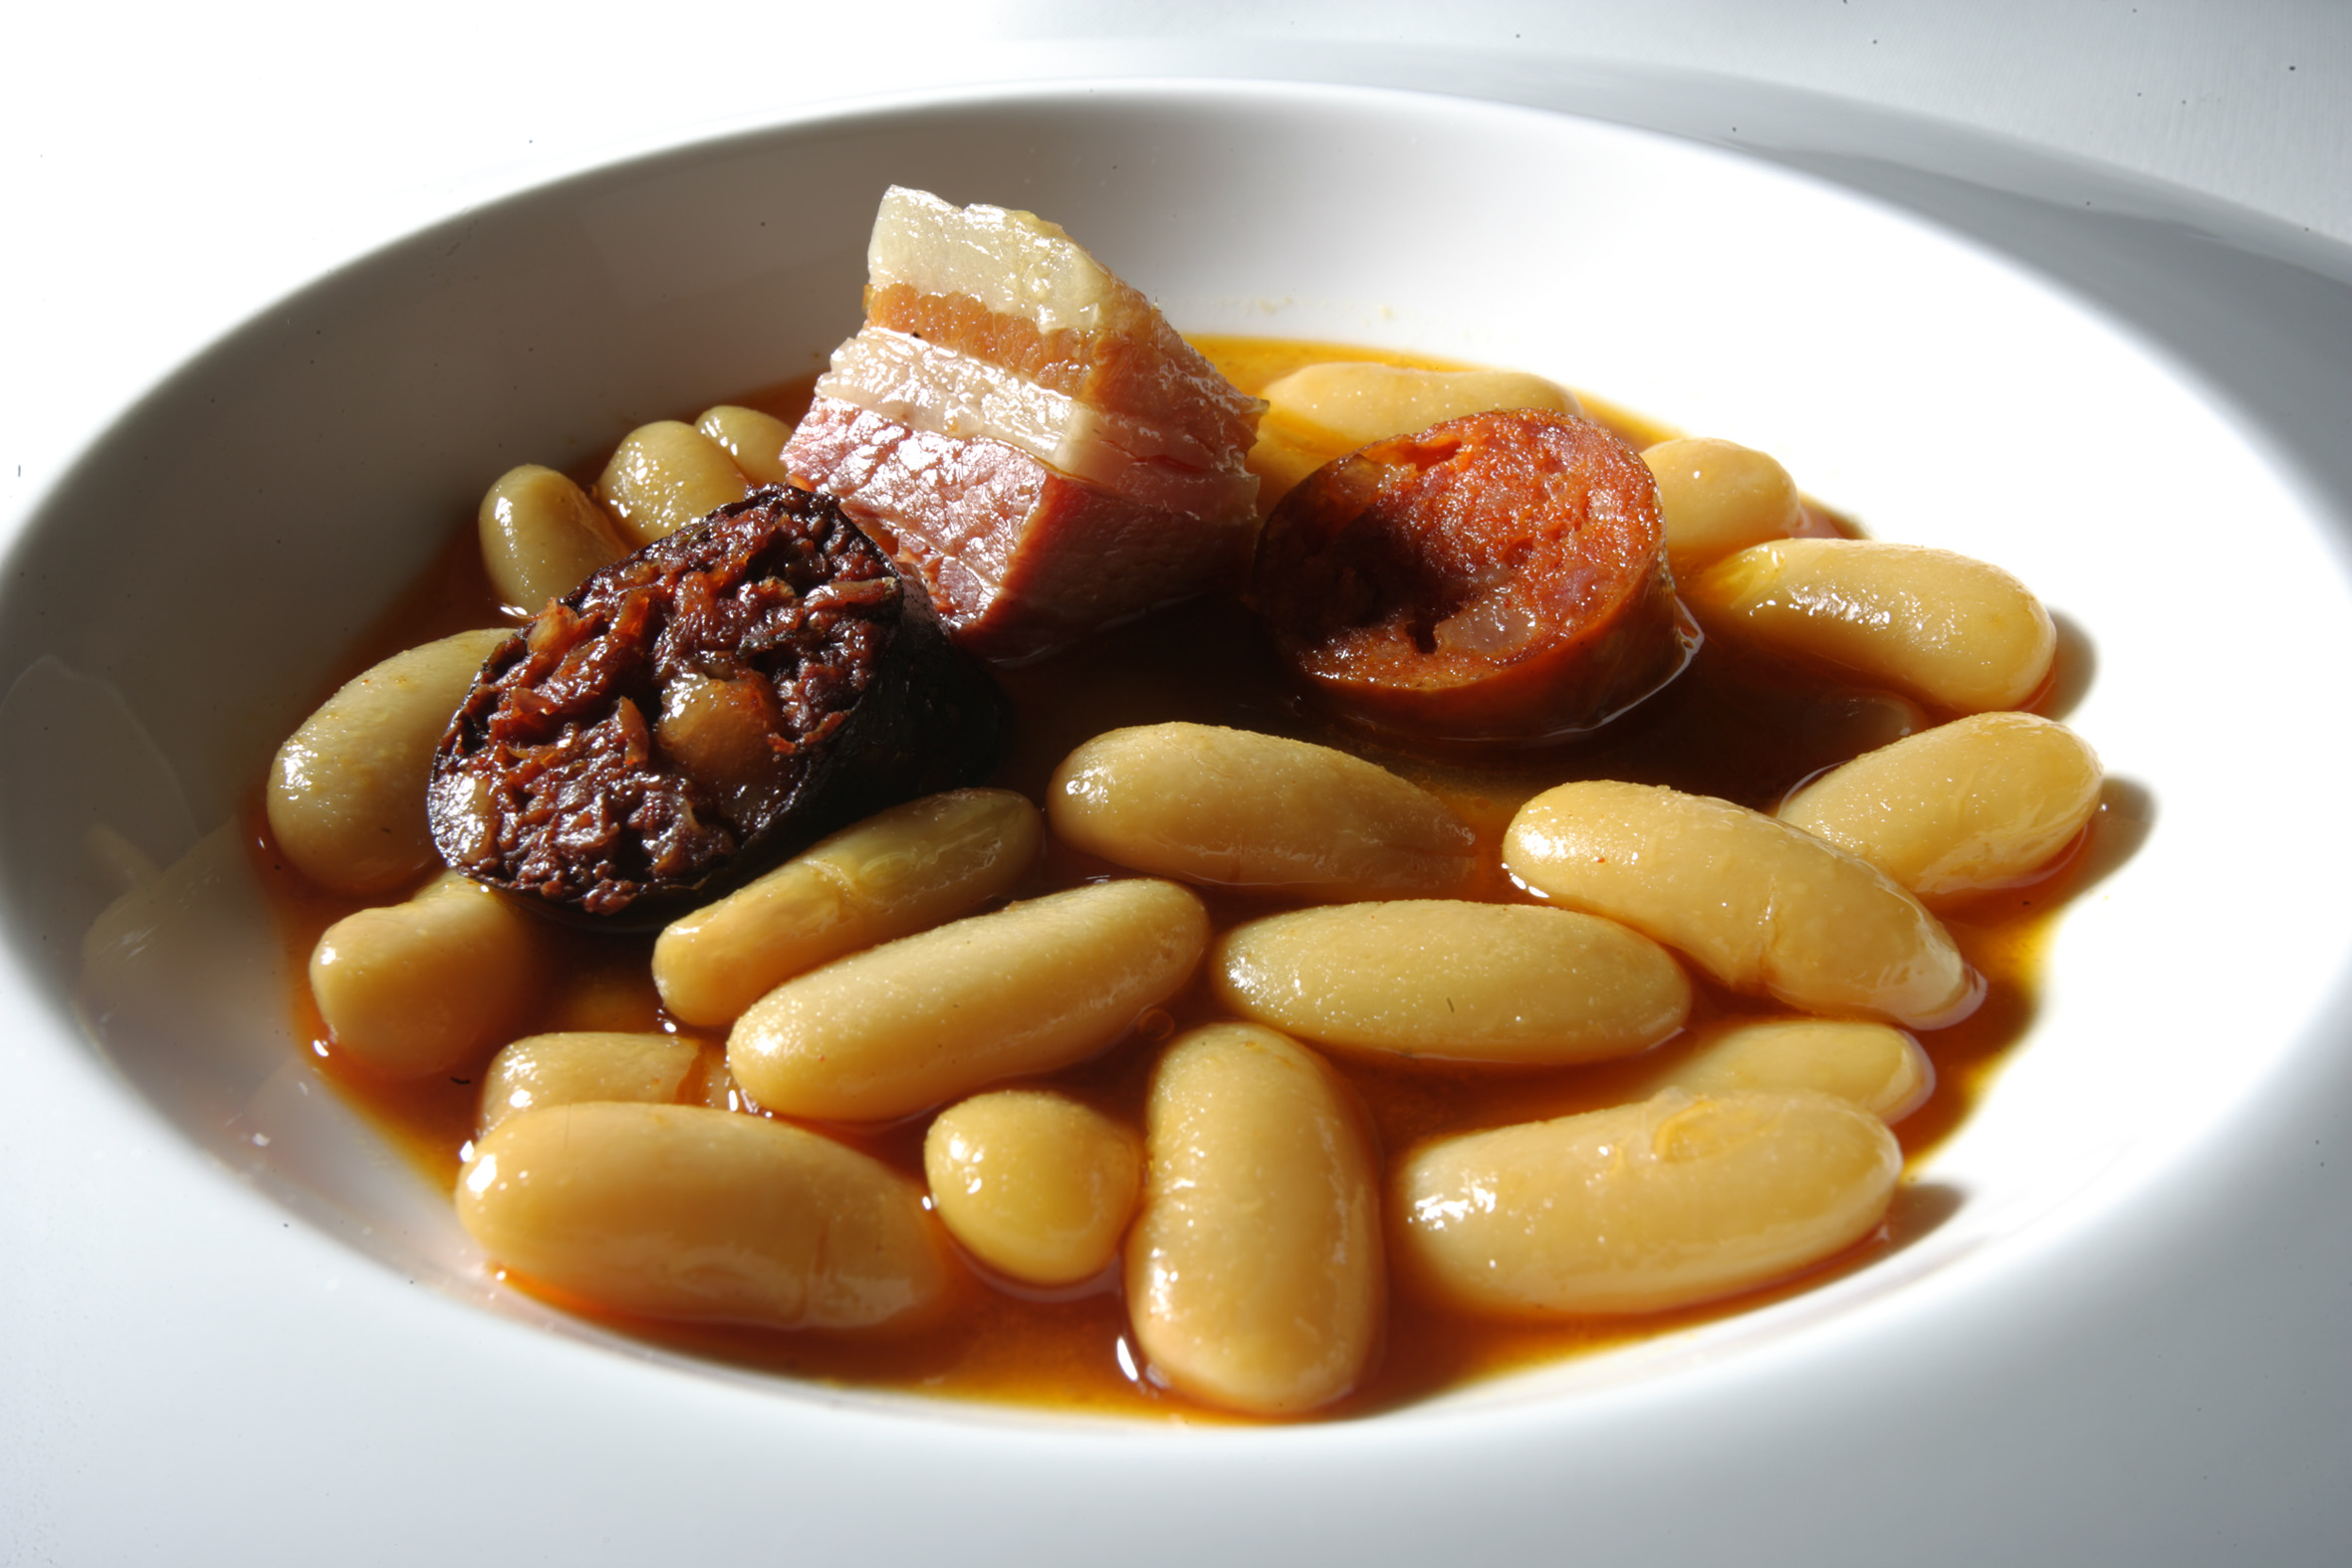  Fabada, a classic Asturian stew